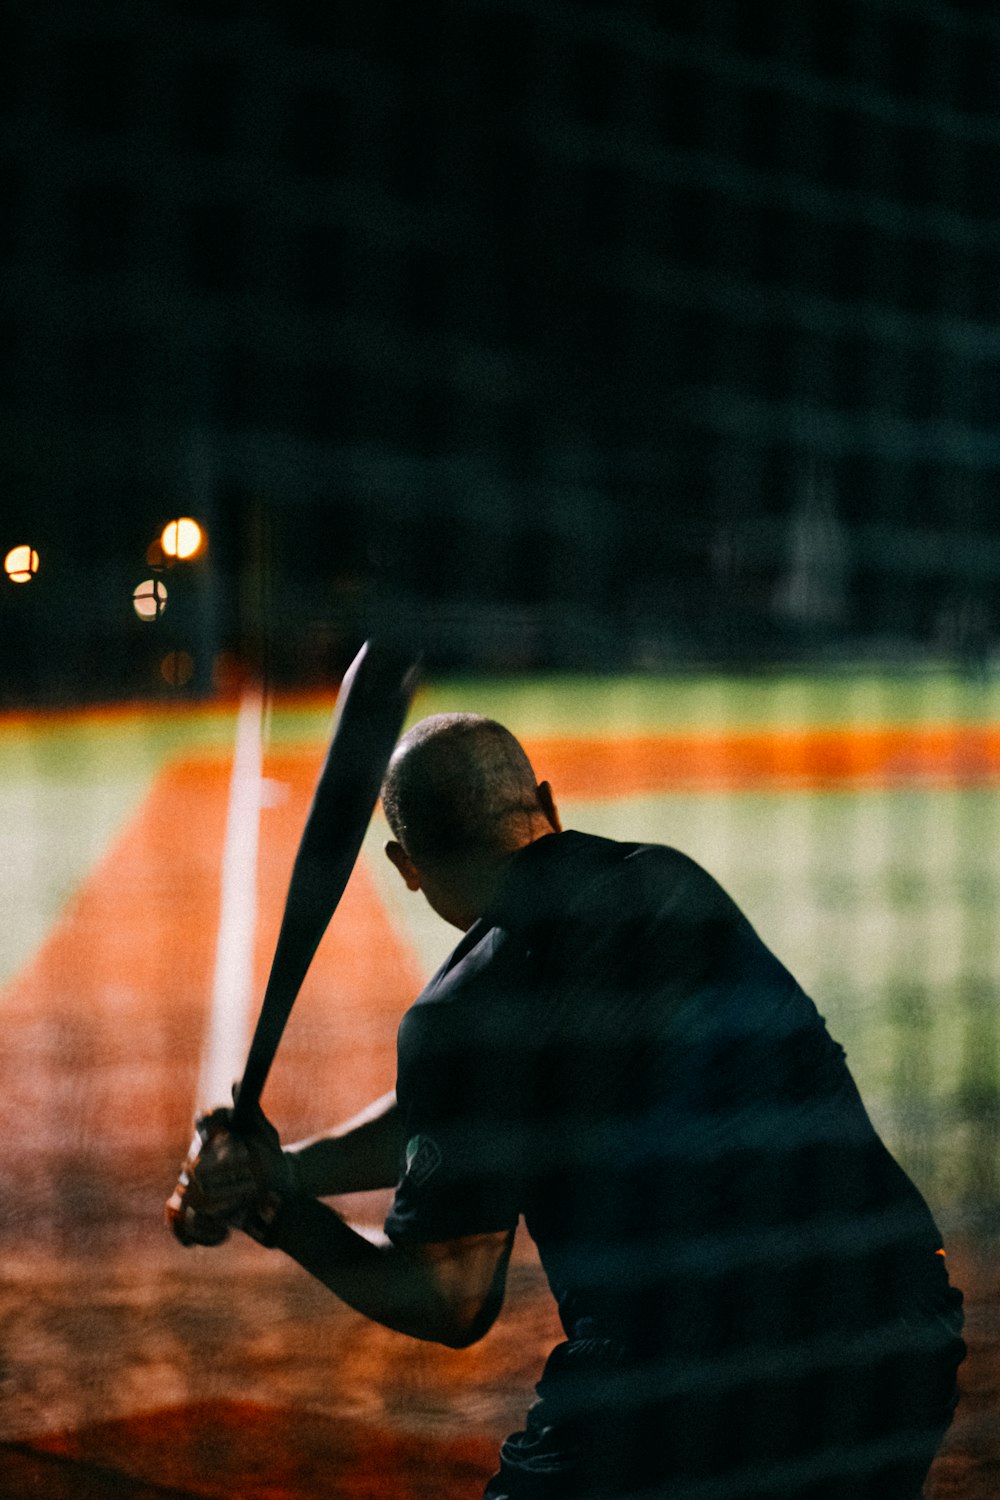 a man holding a baseball bat on a baseball field